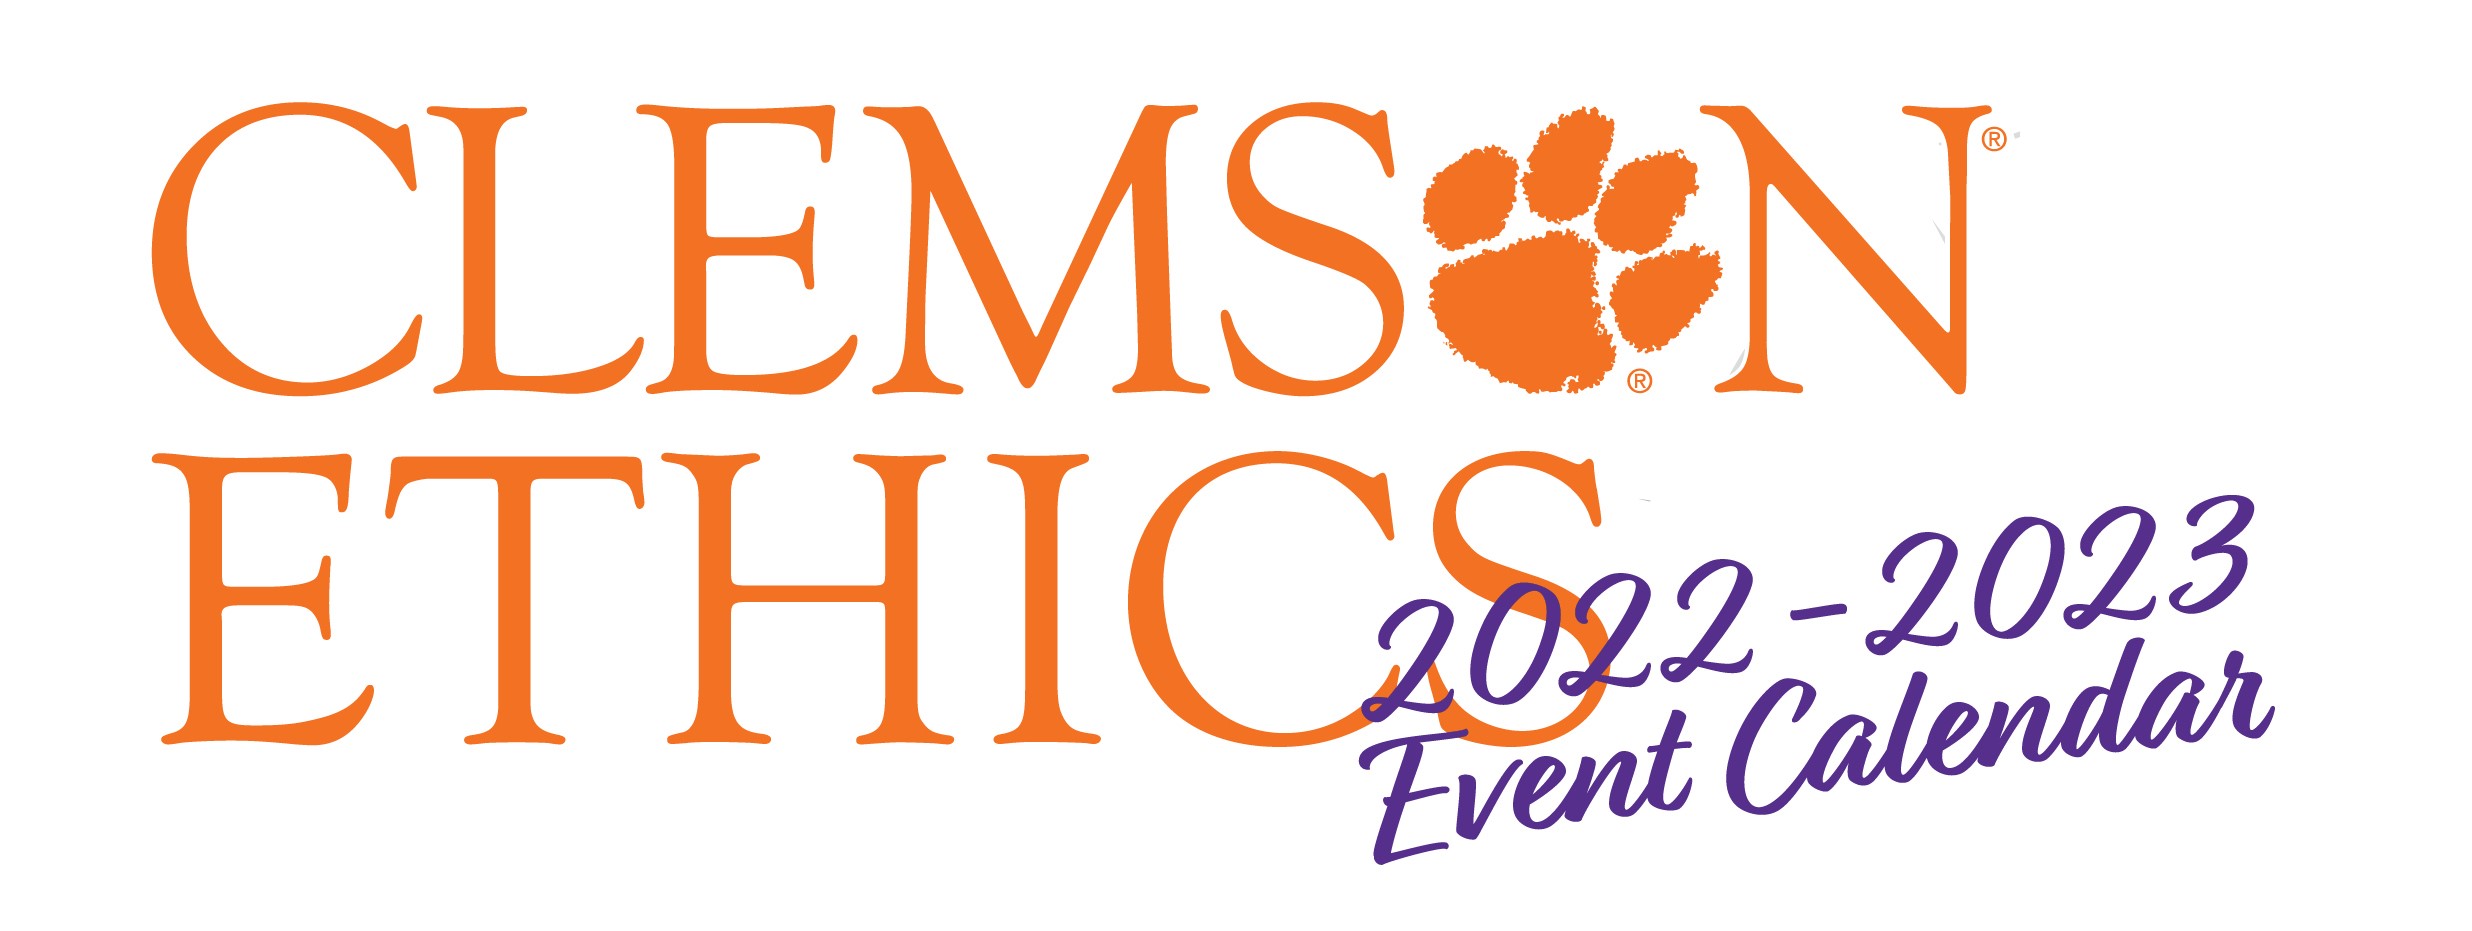 Clemson Academic Calendar 2022.2021 2022 Events Clemson University South Carolina